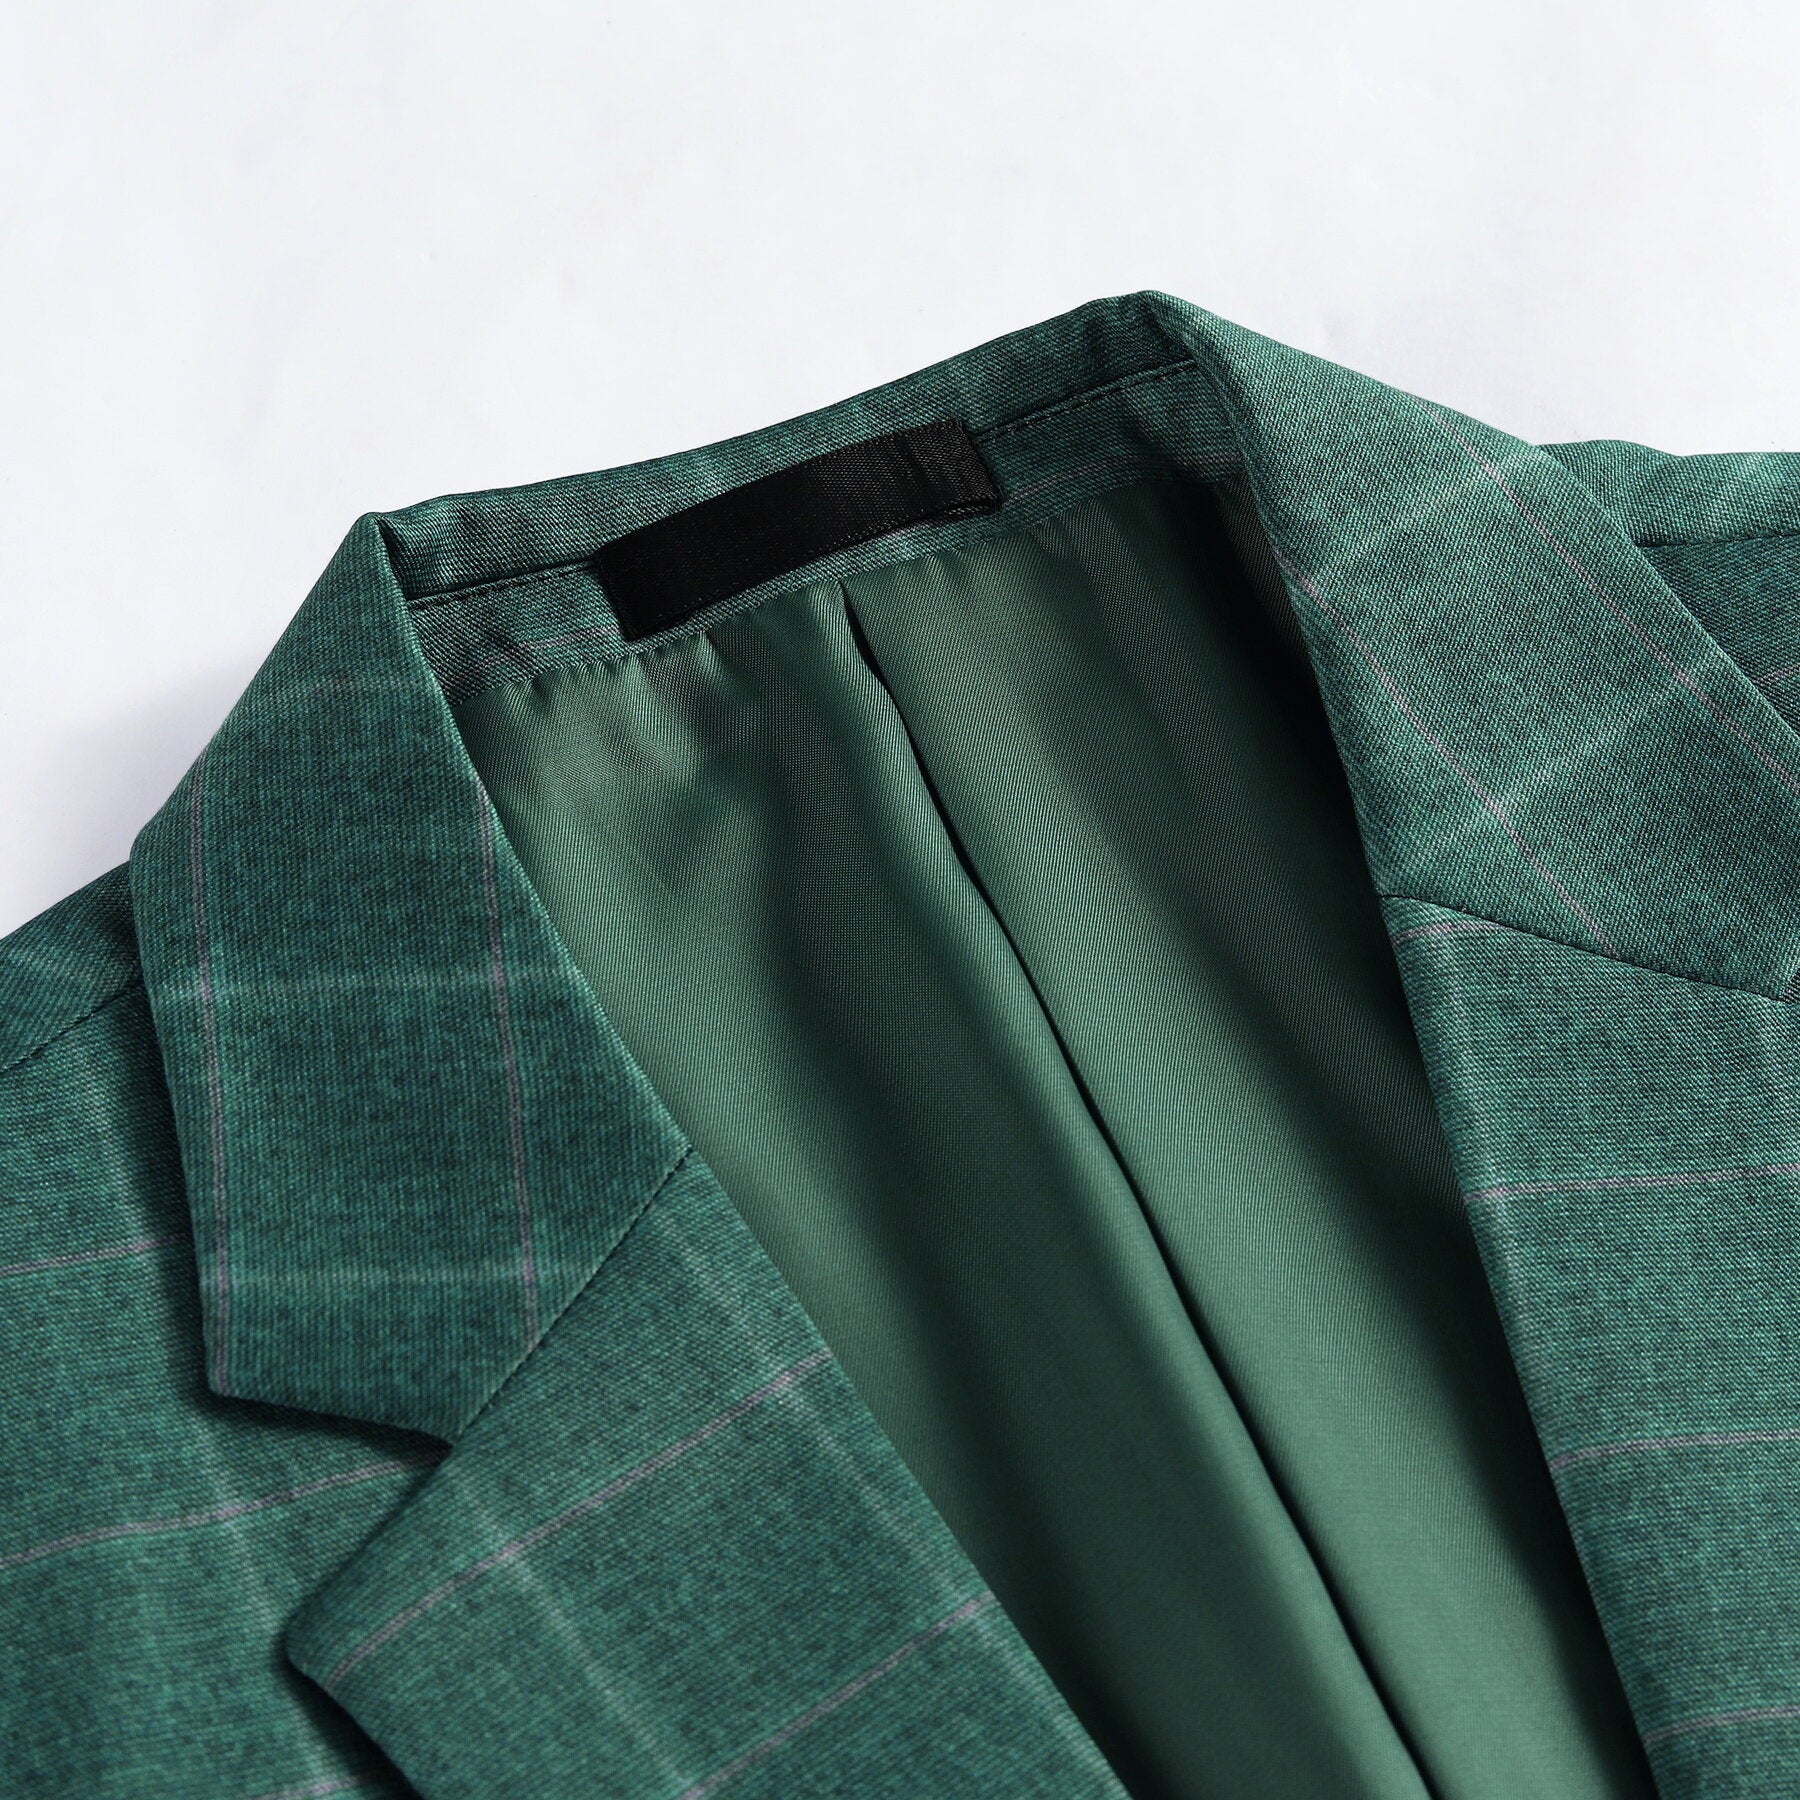 3-Piece Slim Fit Green Plaid Modern Suit